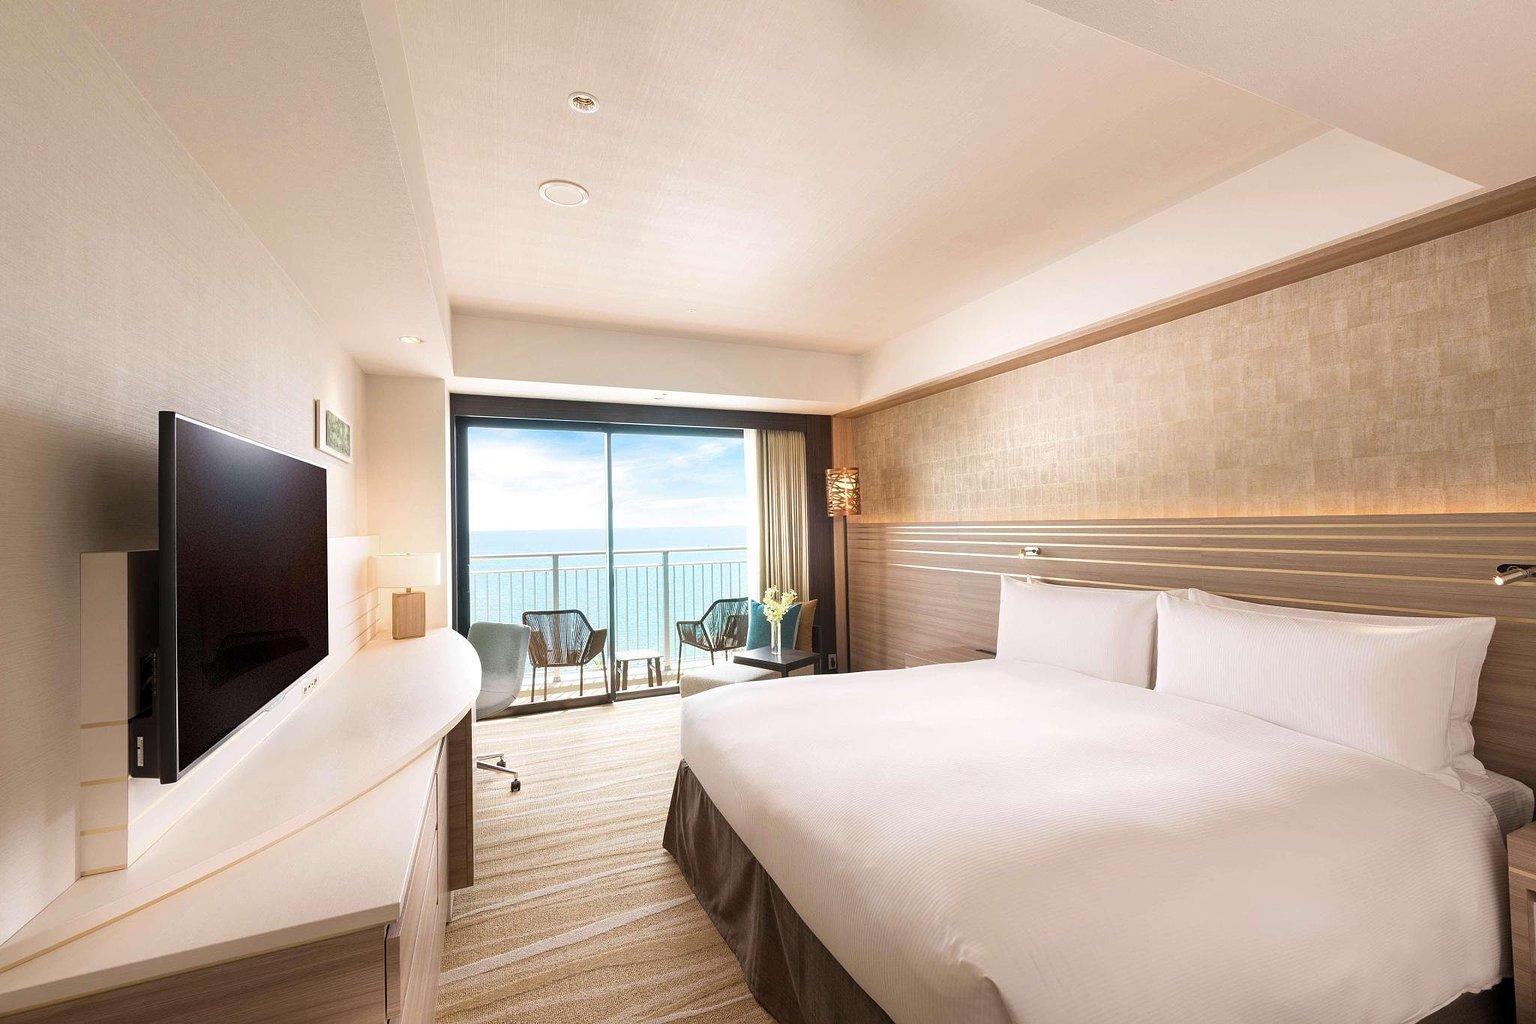 King Guest Room Ocean View With Balcony - 沖繩北谷希爾頓逸林度假酒店  / DoubleTree by Hilton Okinawa Chatan Resort